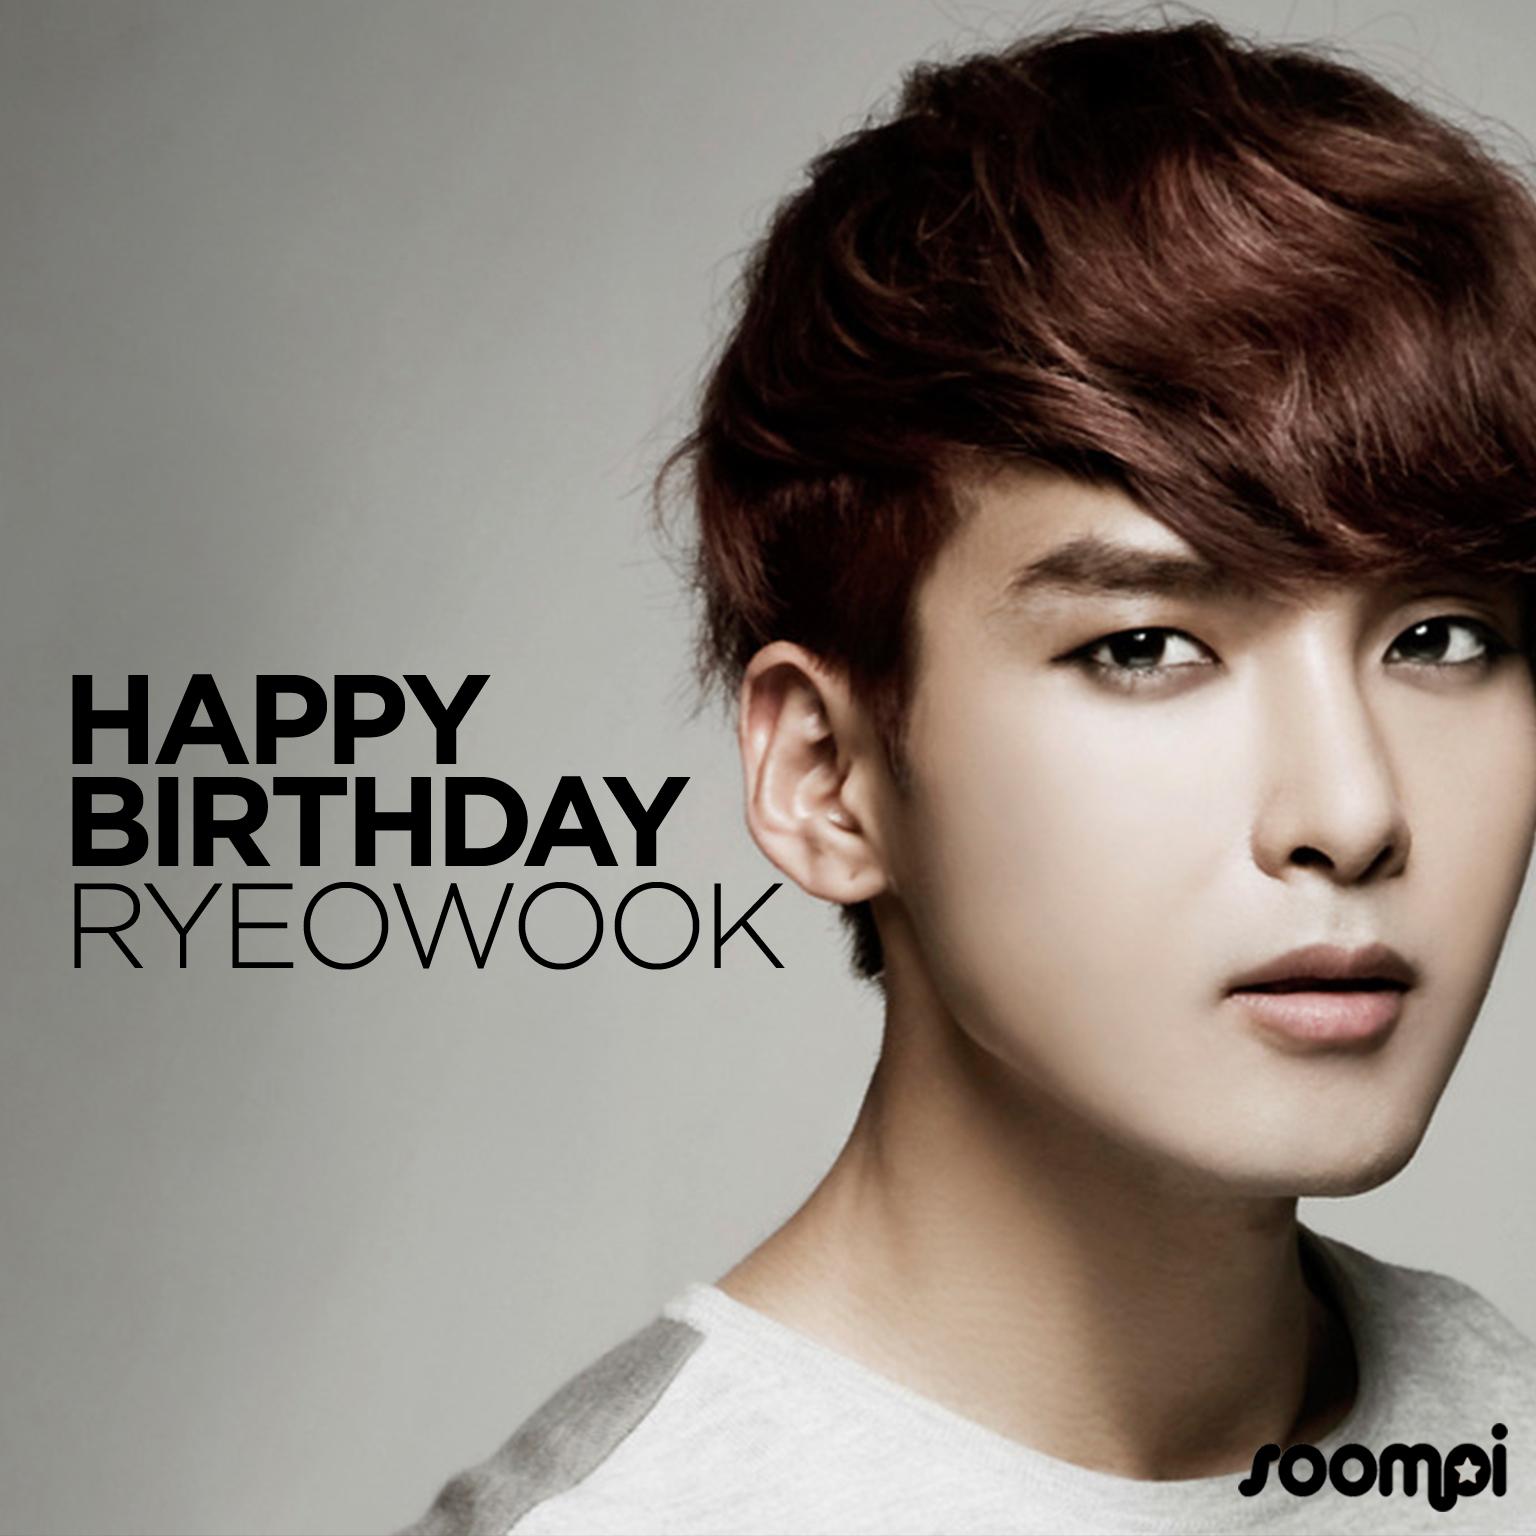 Happy Birthday Kim Ryeowook^^ Happy Birthday to \s
Ryeowook! 